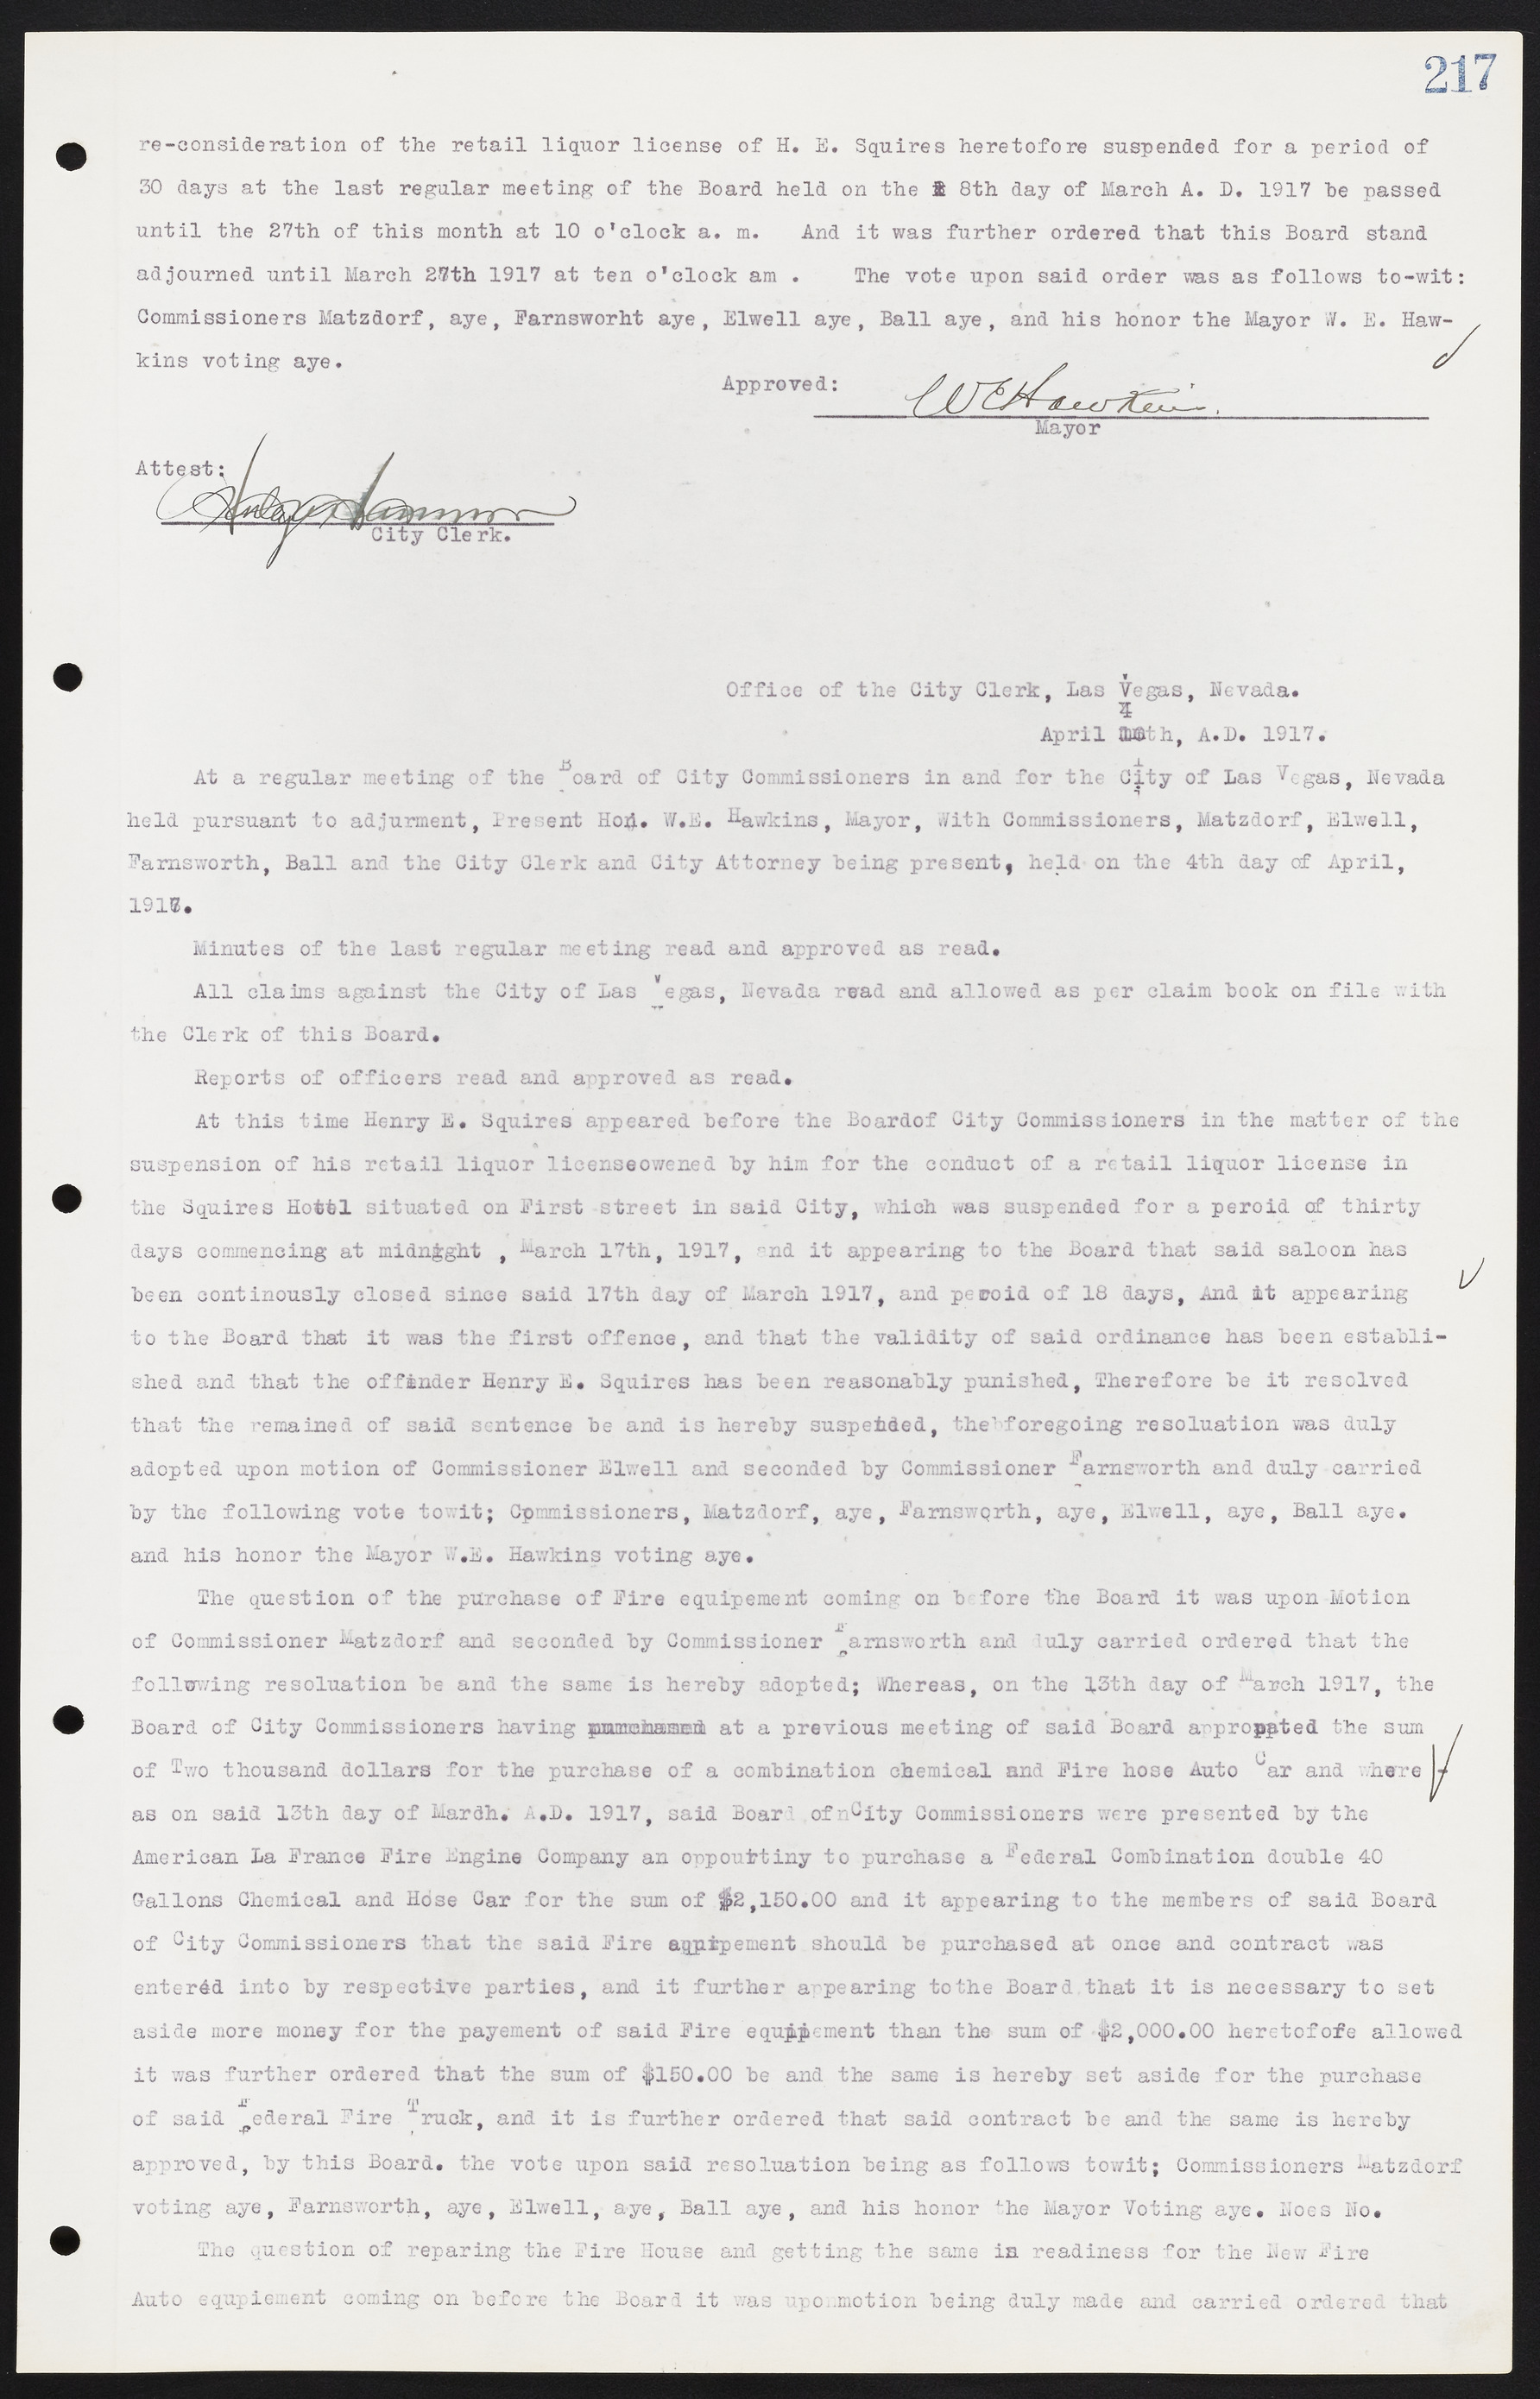 Las Vegas City Commission Minutes, June 22, 1911 to February 7, 1922, lvc000001-233